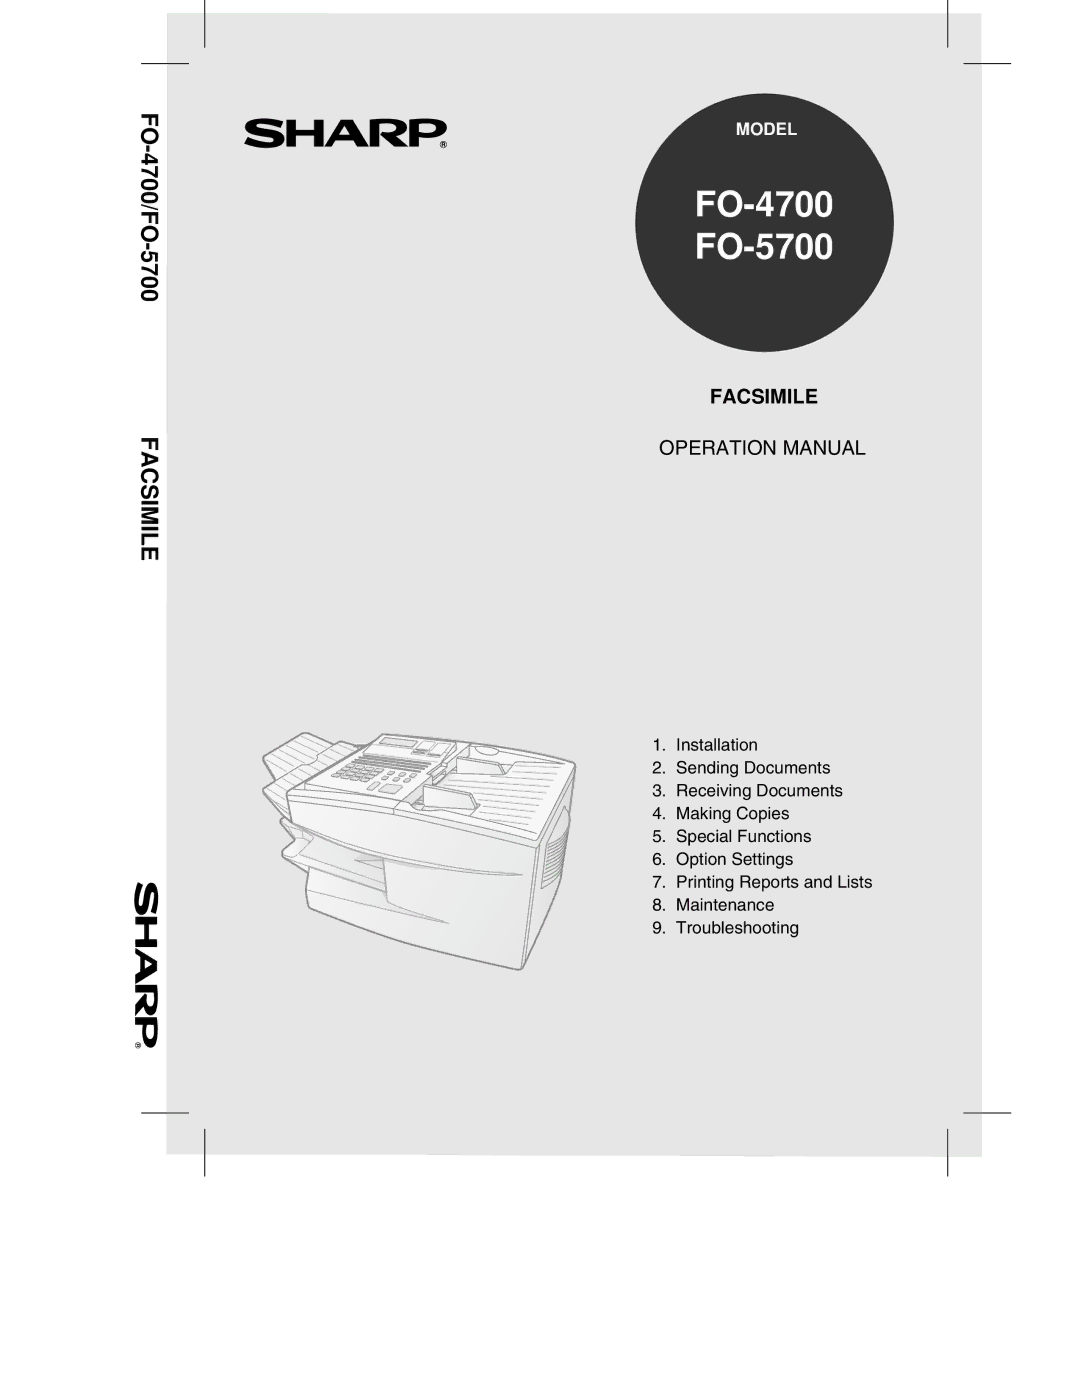 Sharp operation manual FO-4700 FO-5700 